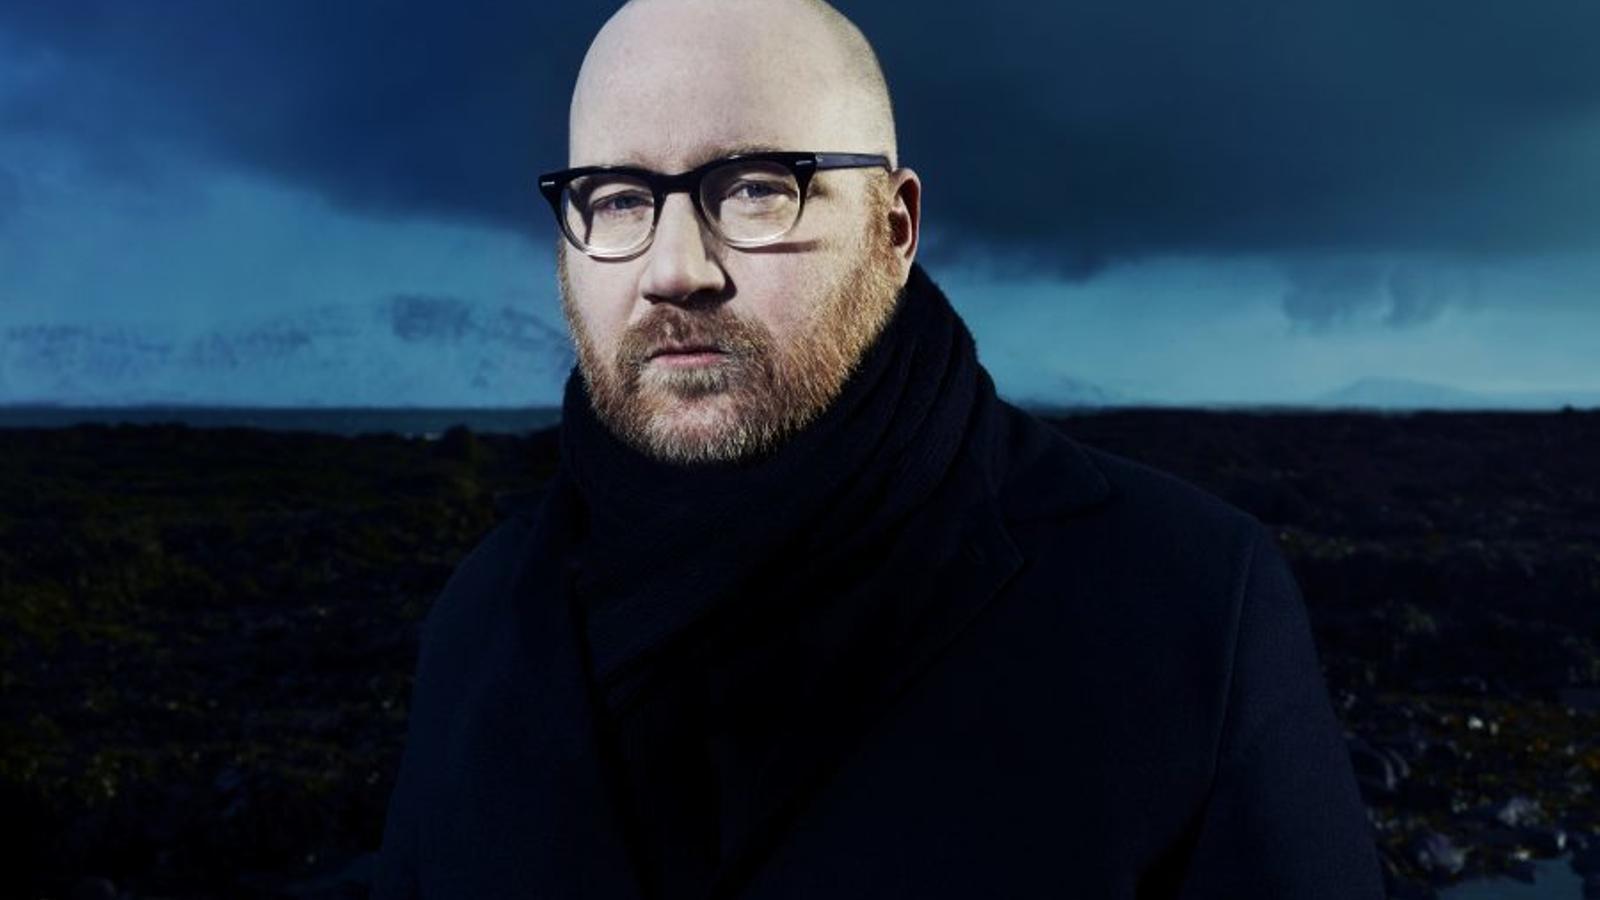 Mor el músic  islandès Jóhann Jóhannsson, autor de la banda sonora de 'Sicario' i 'Theory of Everything'